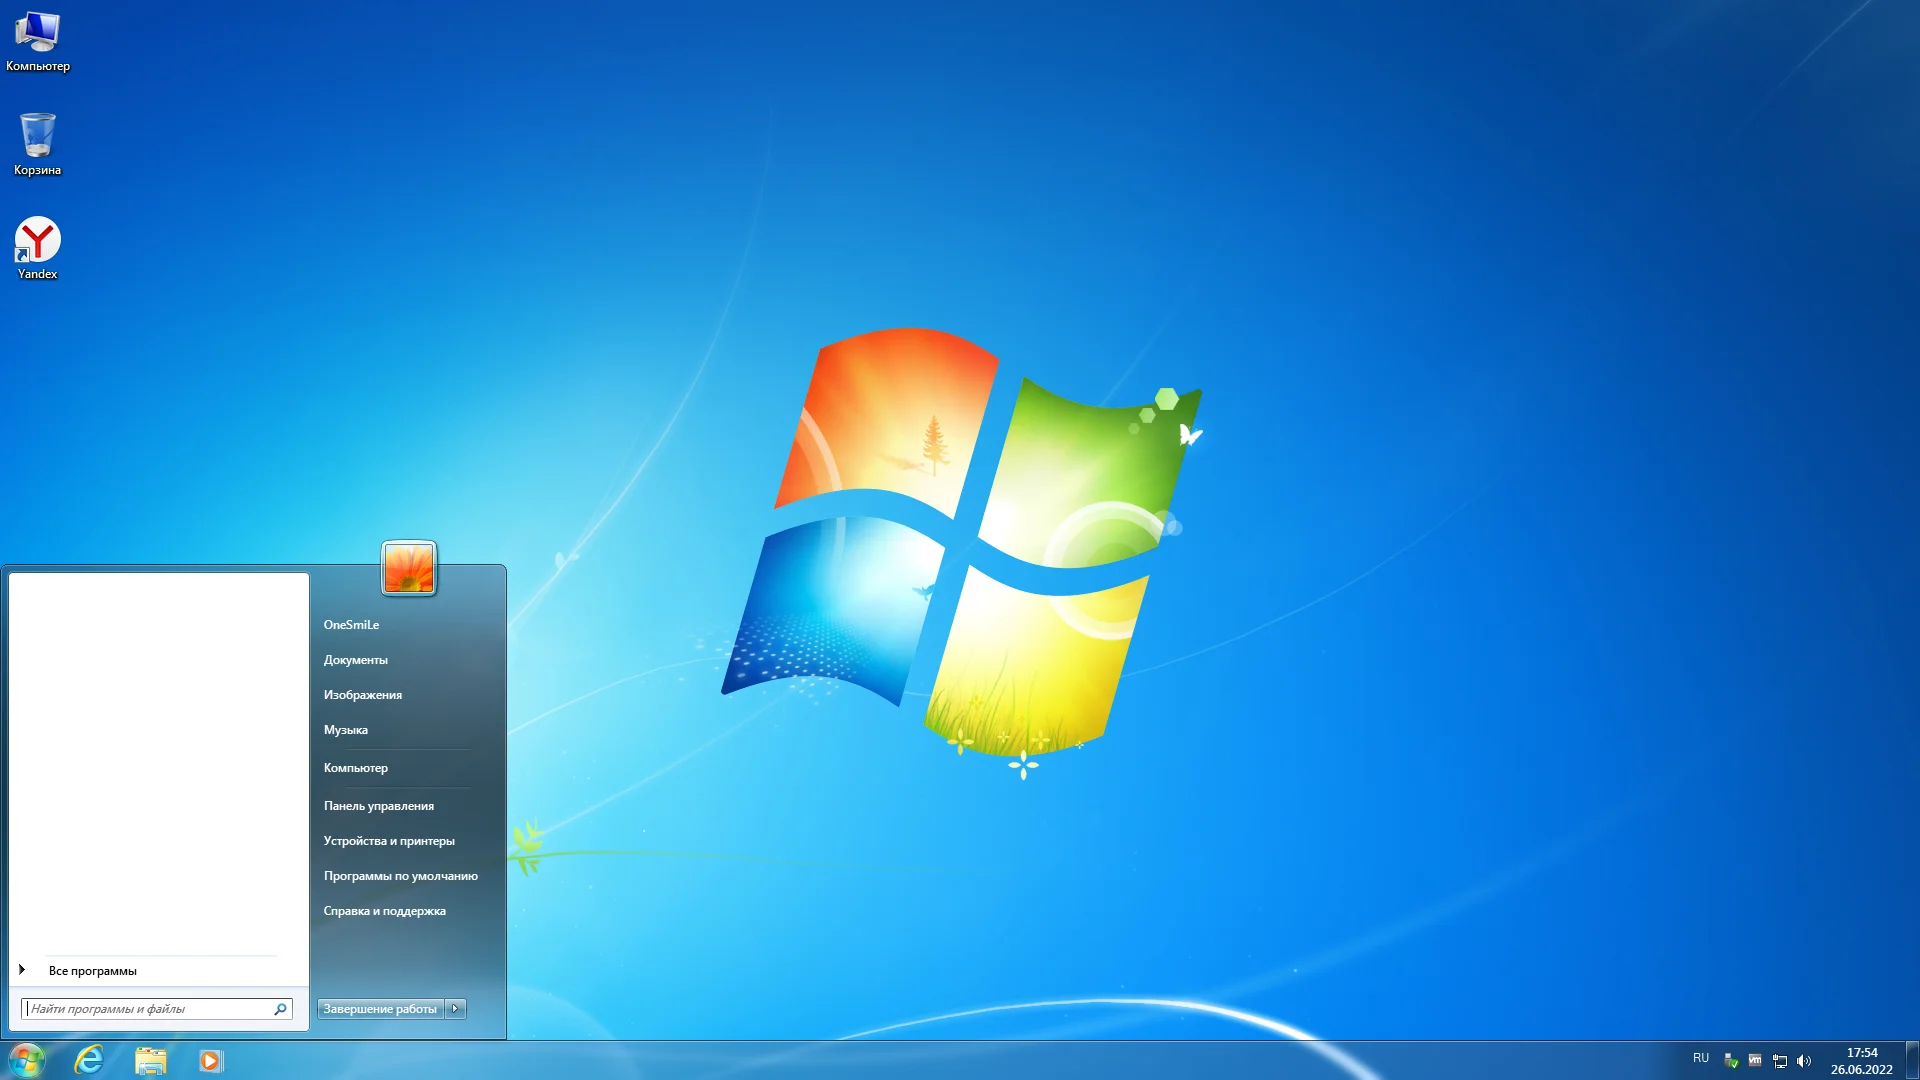 Windows 7 Enterprise SP1 x64 Rus by OneSmiLe [26.06.2022]